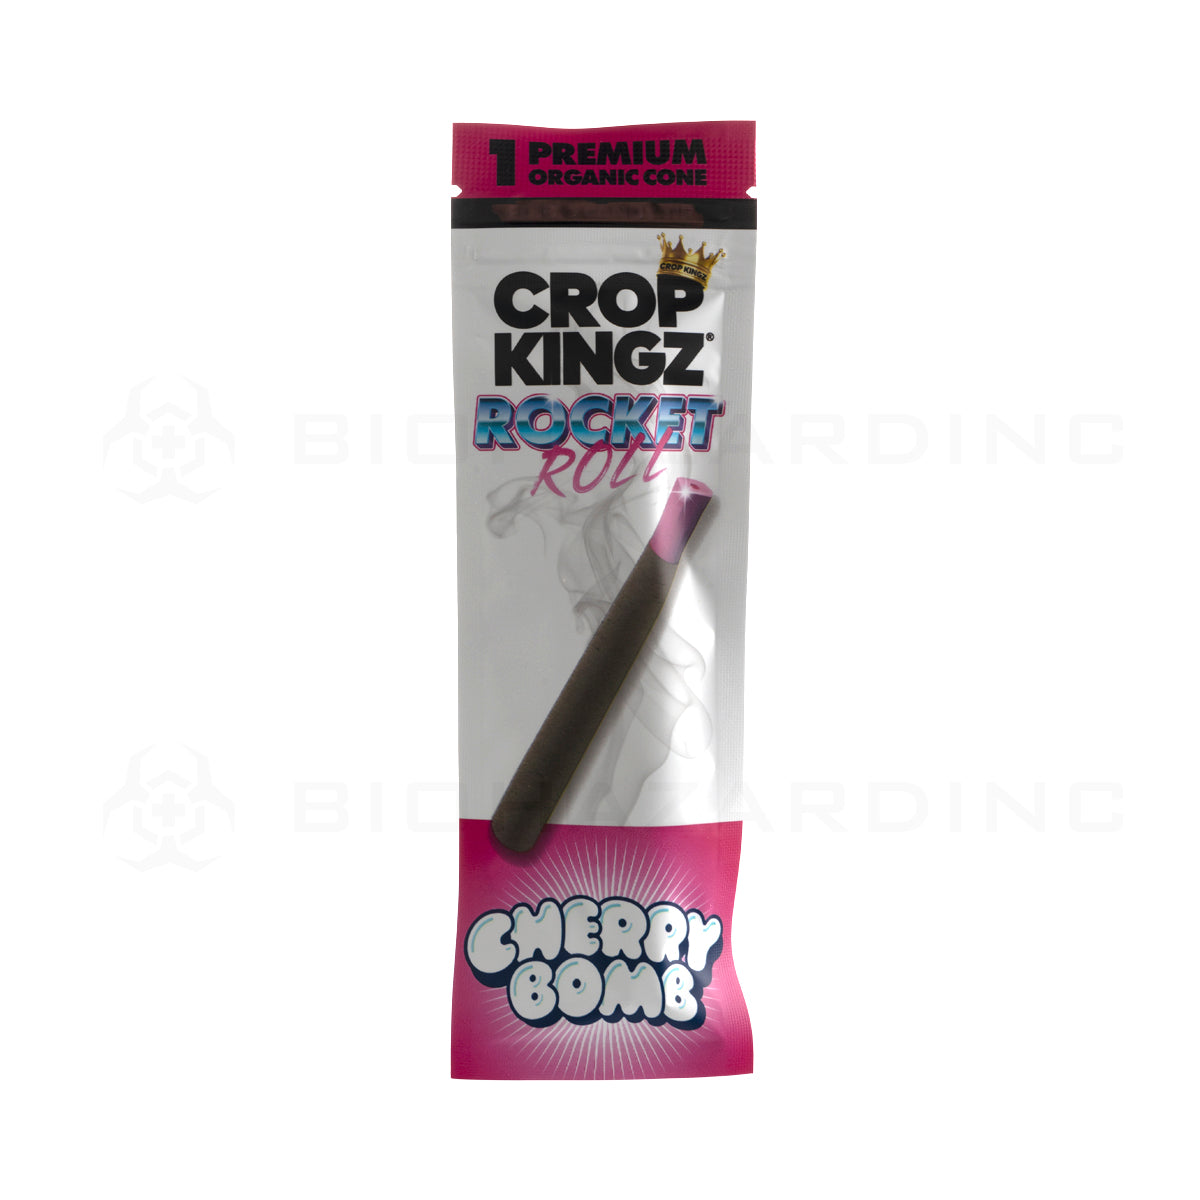 Crop Kingz | Rocket Roll Organic Hemp Wrap | Cherry Bomb - 15 Count Hemp Wraps Crop Kingz   